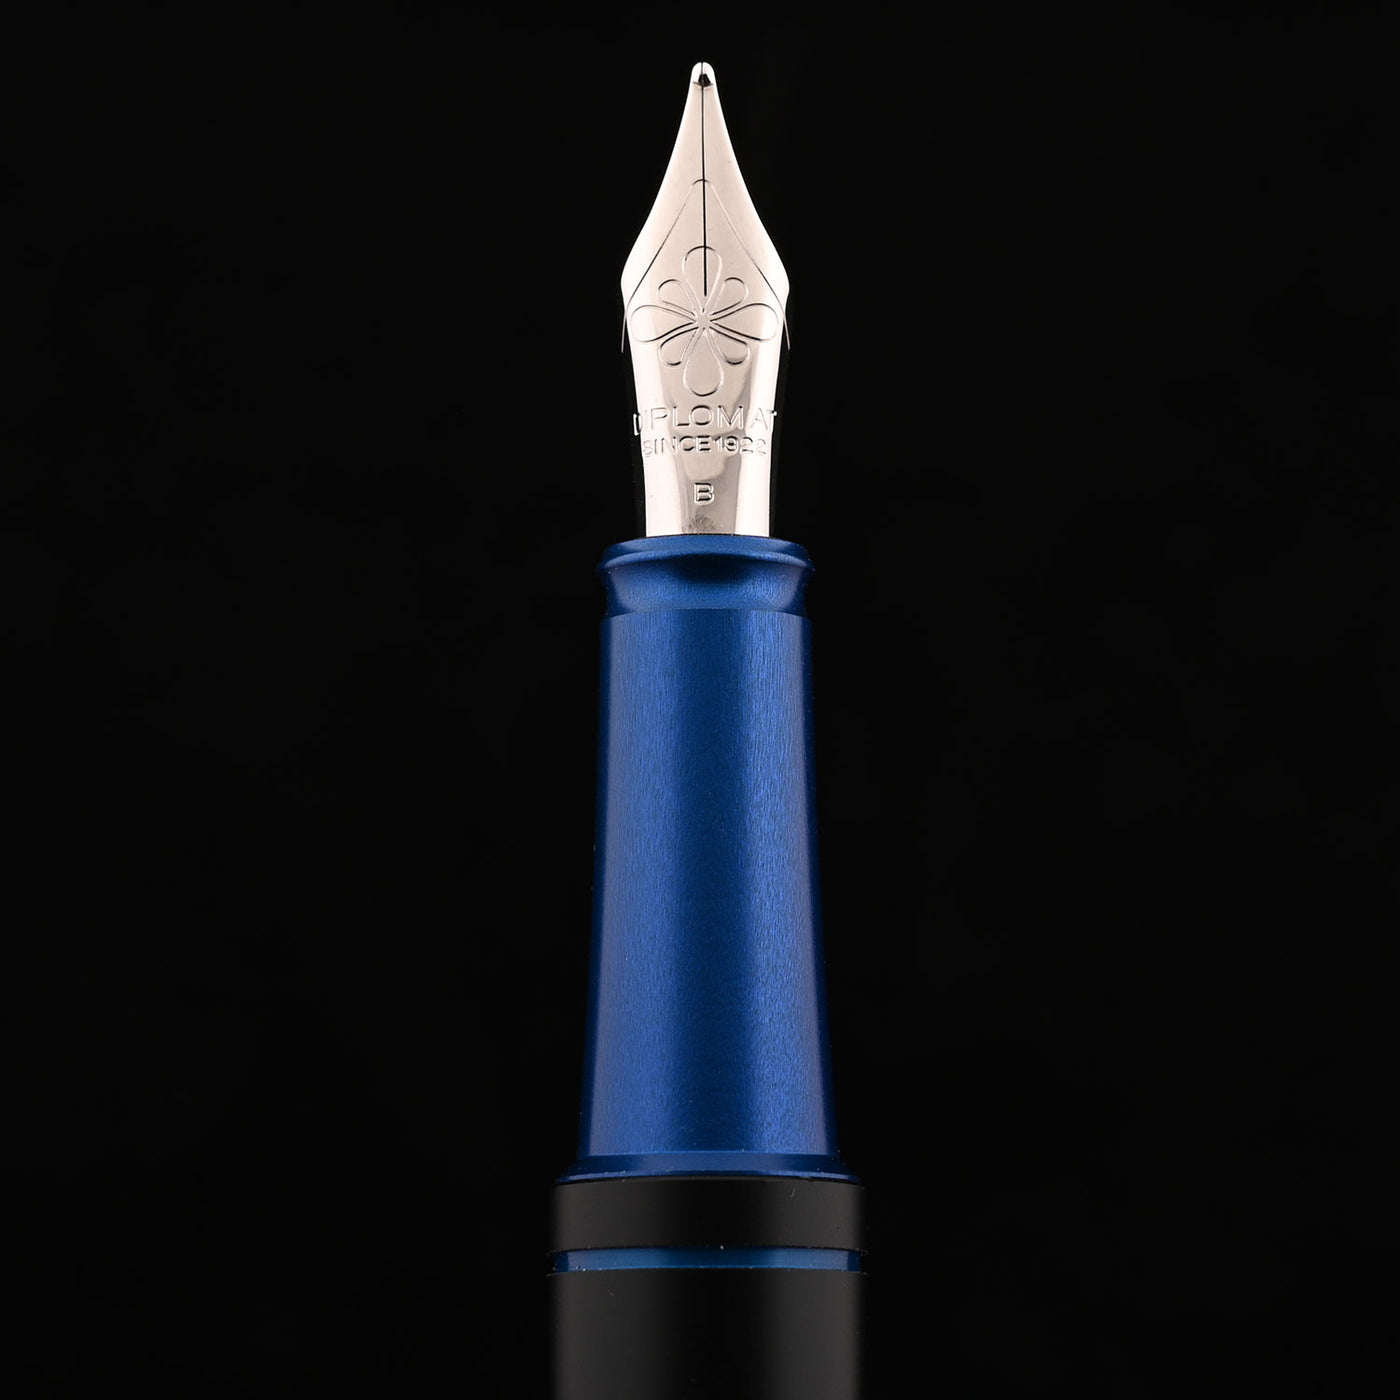 Diplomat Elox Fountain Pen - Ring Black/Blue